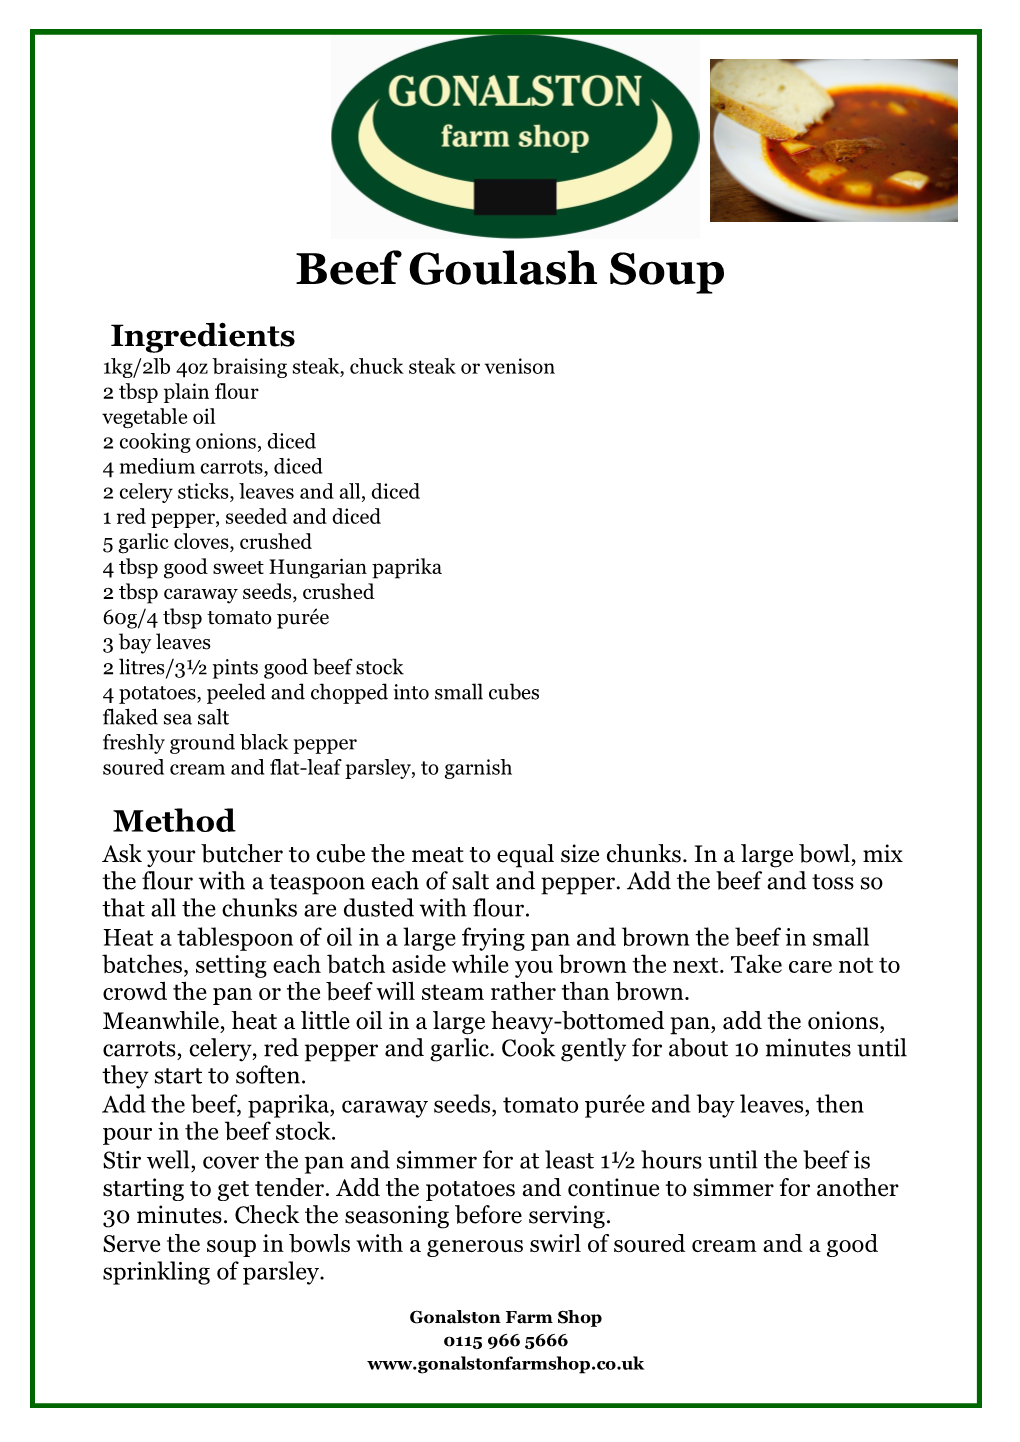 Beef Goulash Soup Recipe